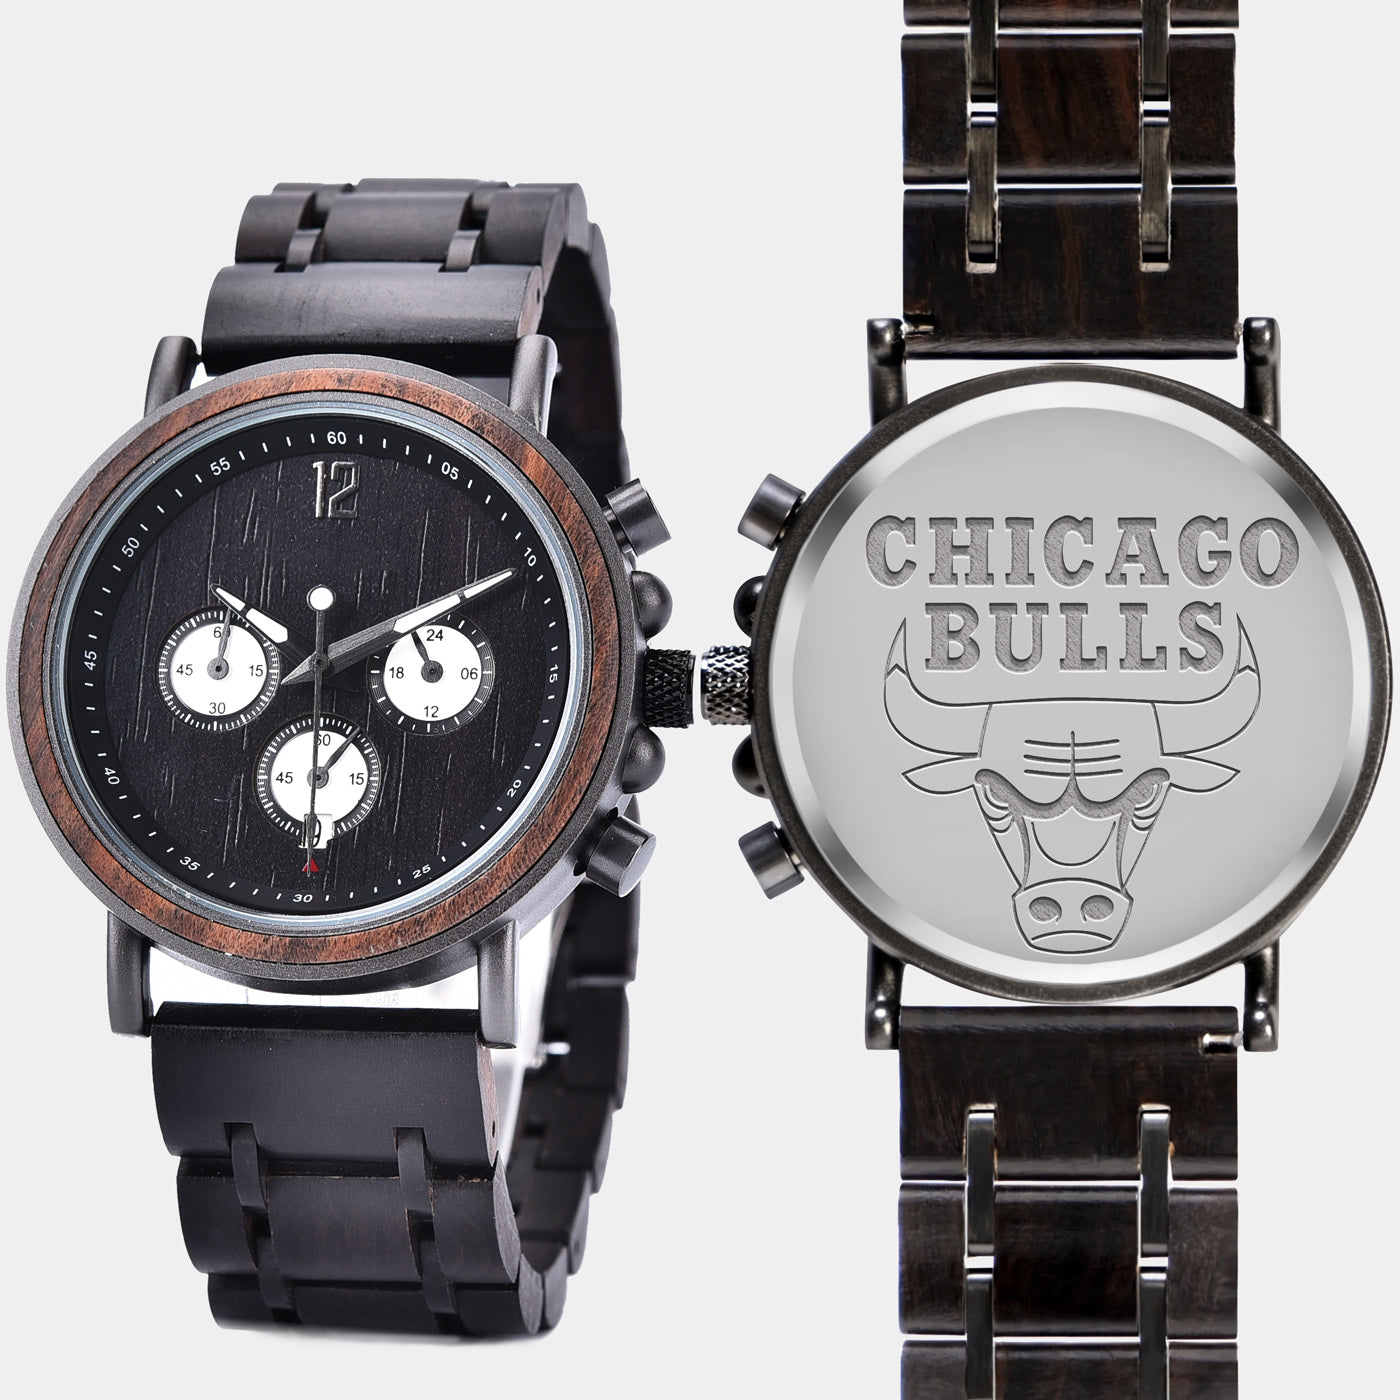 Chicago Bulls Wooden Wristwatch Black Walnut Wood Chronograph Watch - Free Custom Engraving